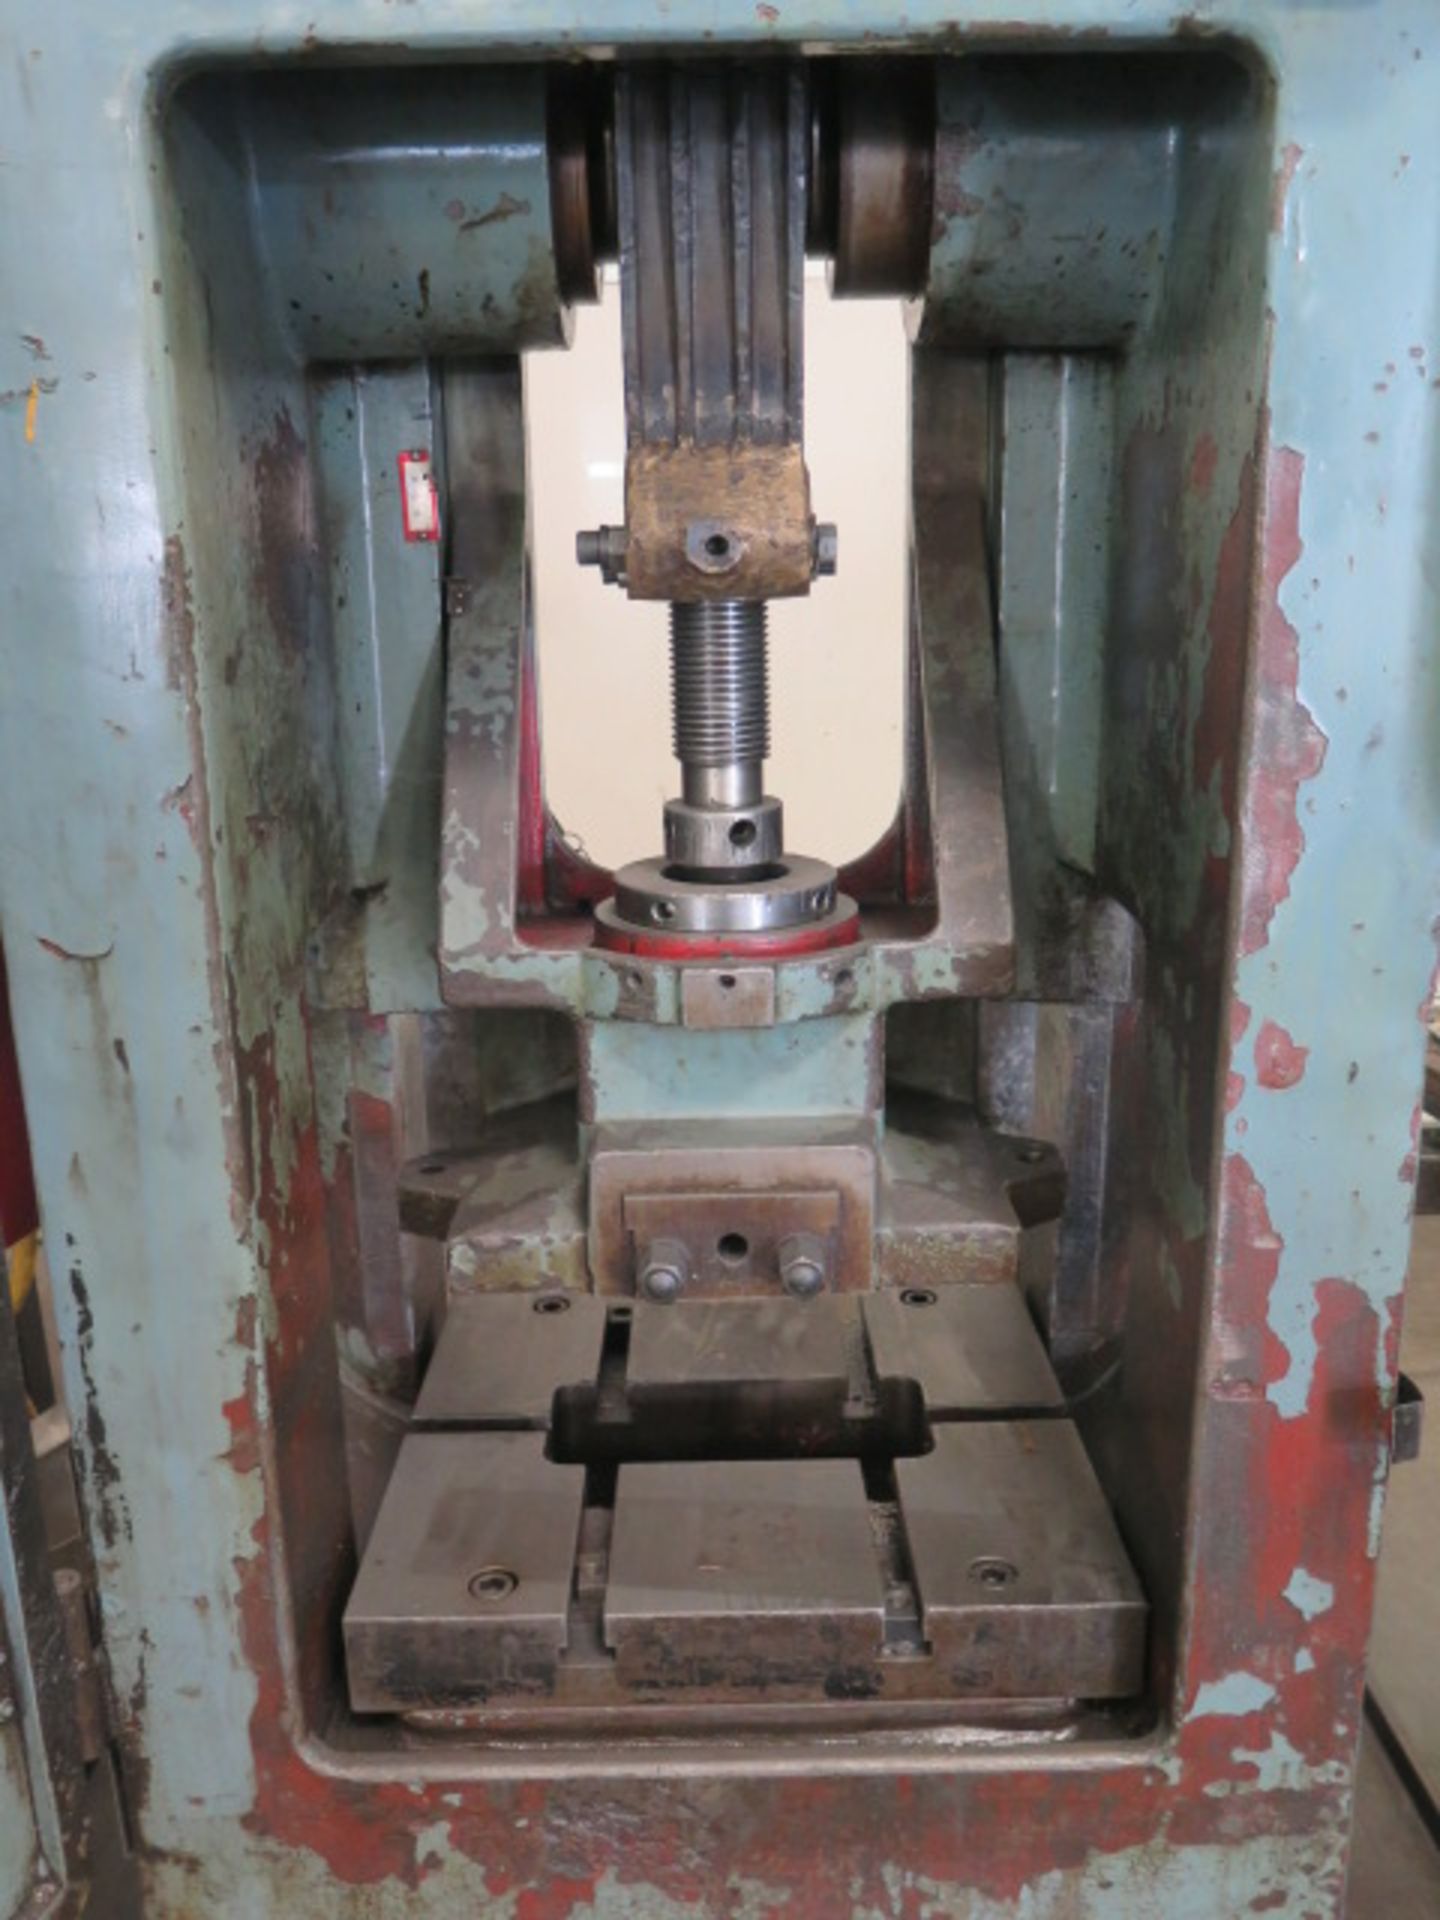 Hidaka FLS-25 25 Ton High Speed Stamping Press w/ Wintriss Clutch and Brake Controls, Die - Image 6 of 10